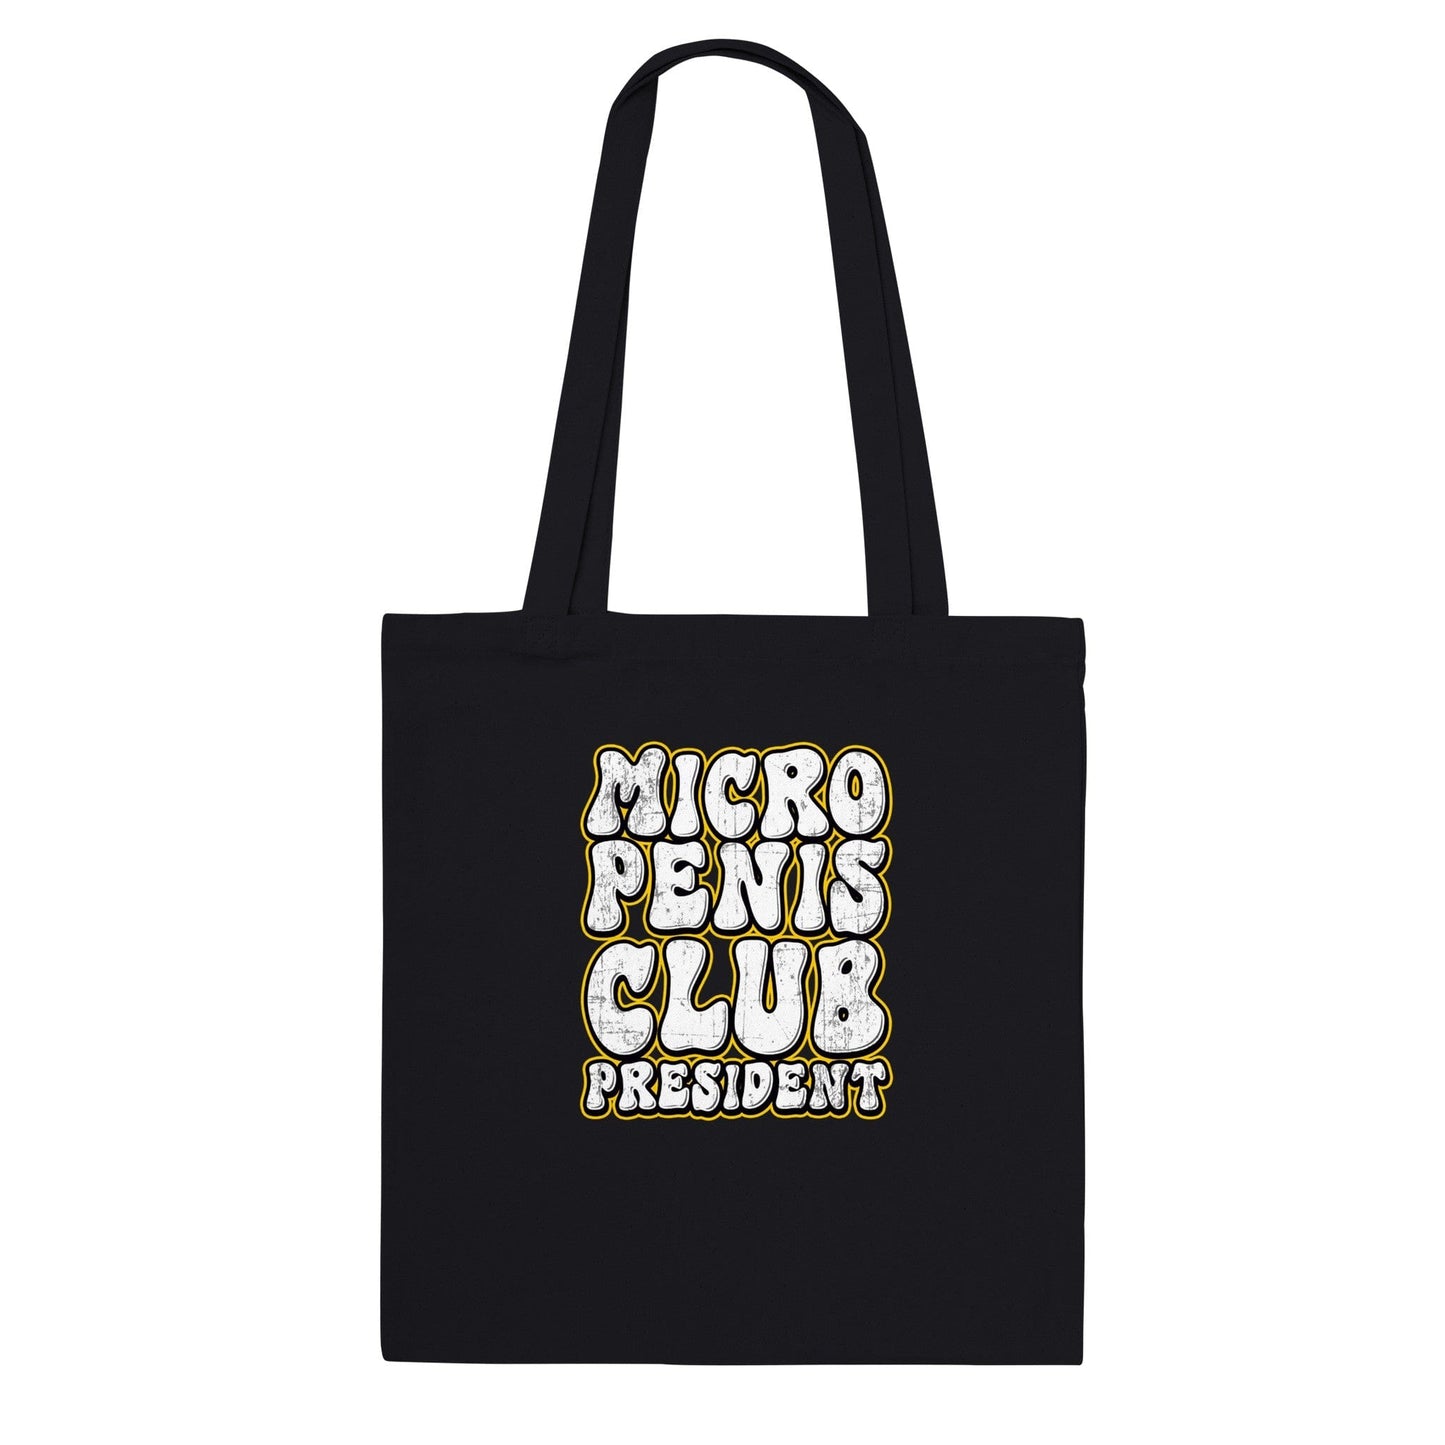 Micro Penis Club Tote Bag Australia Online Color Black